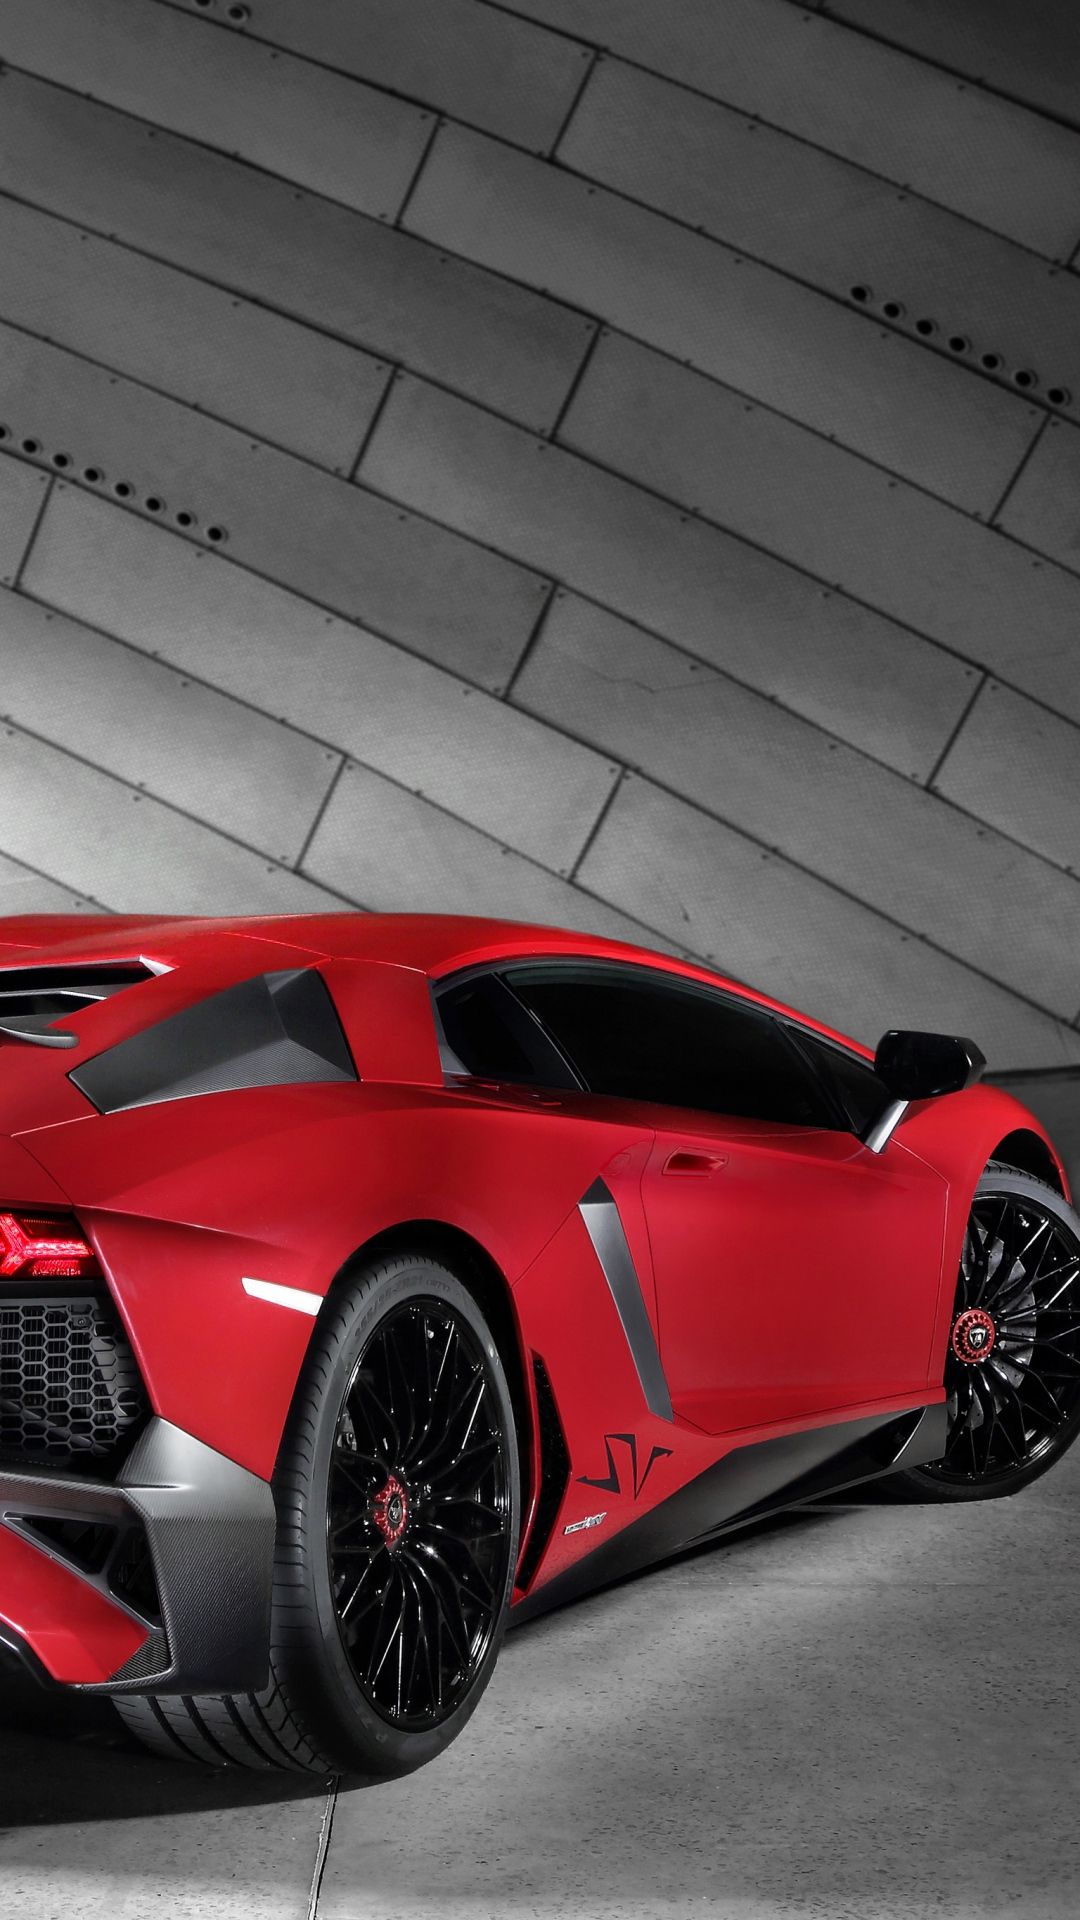 Lamborghini Aventador Sv Wallpaper iPhone